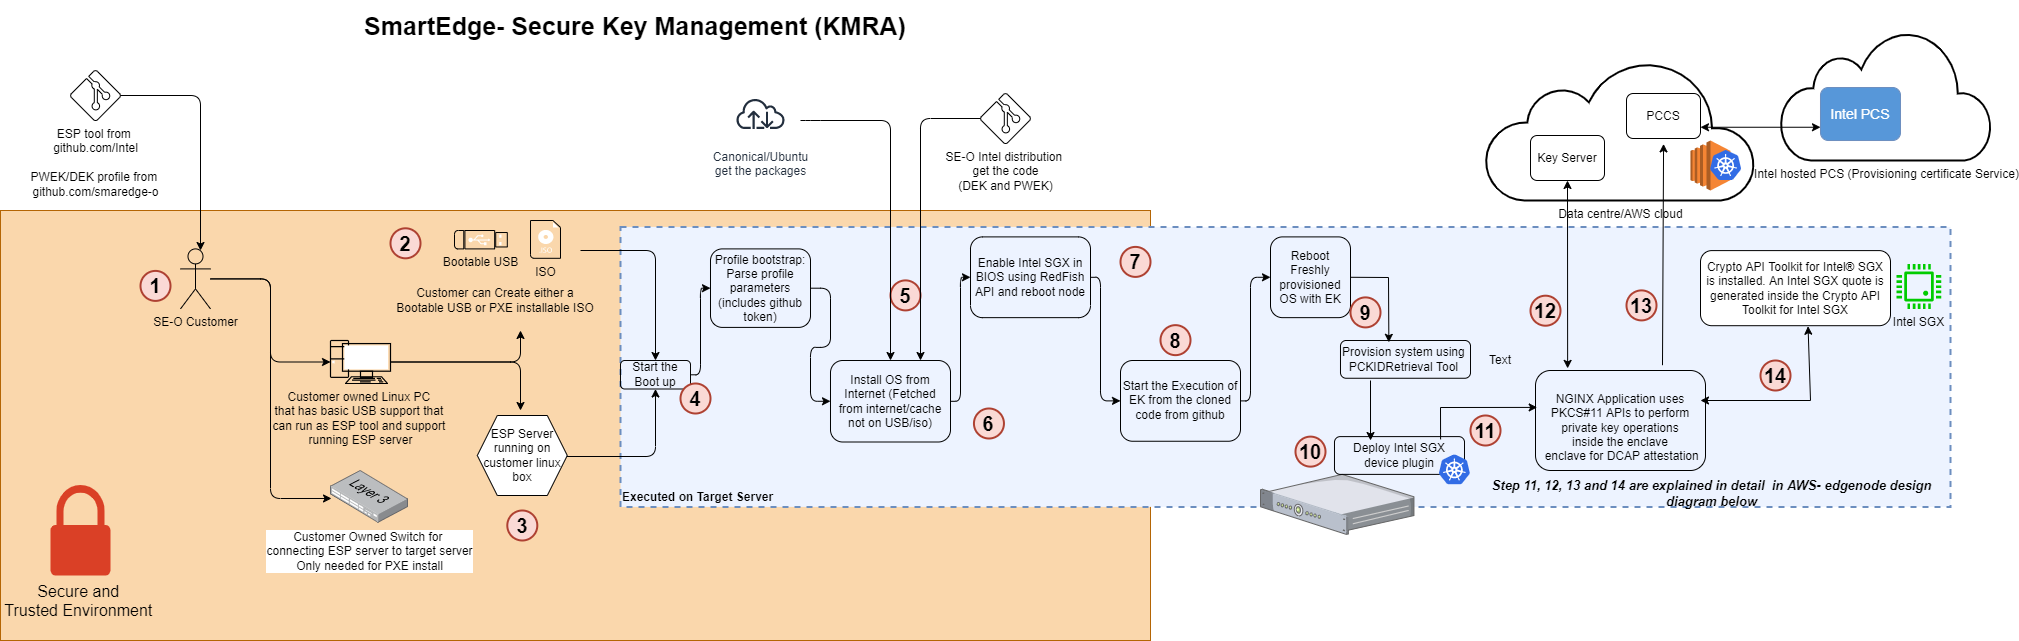 KMRA - Workflow